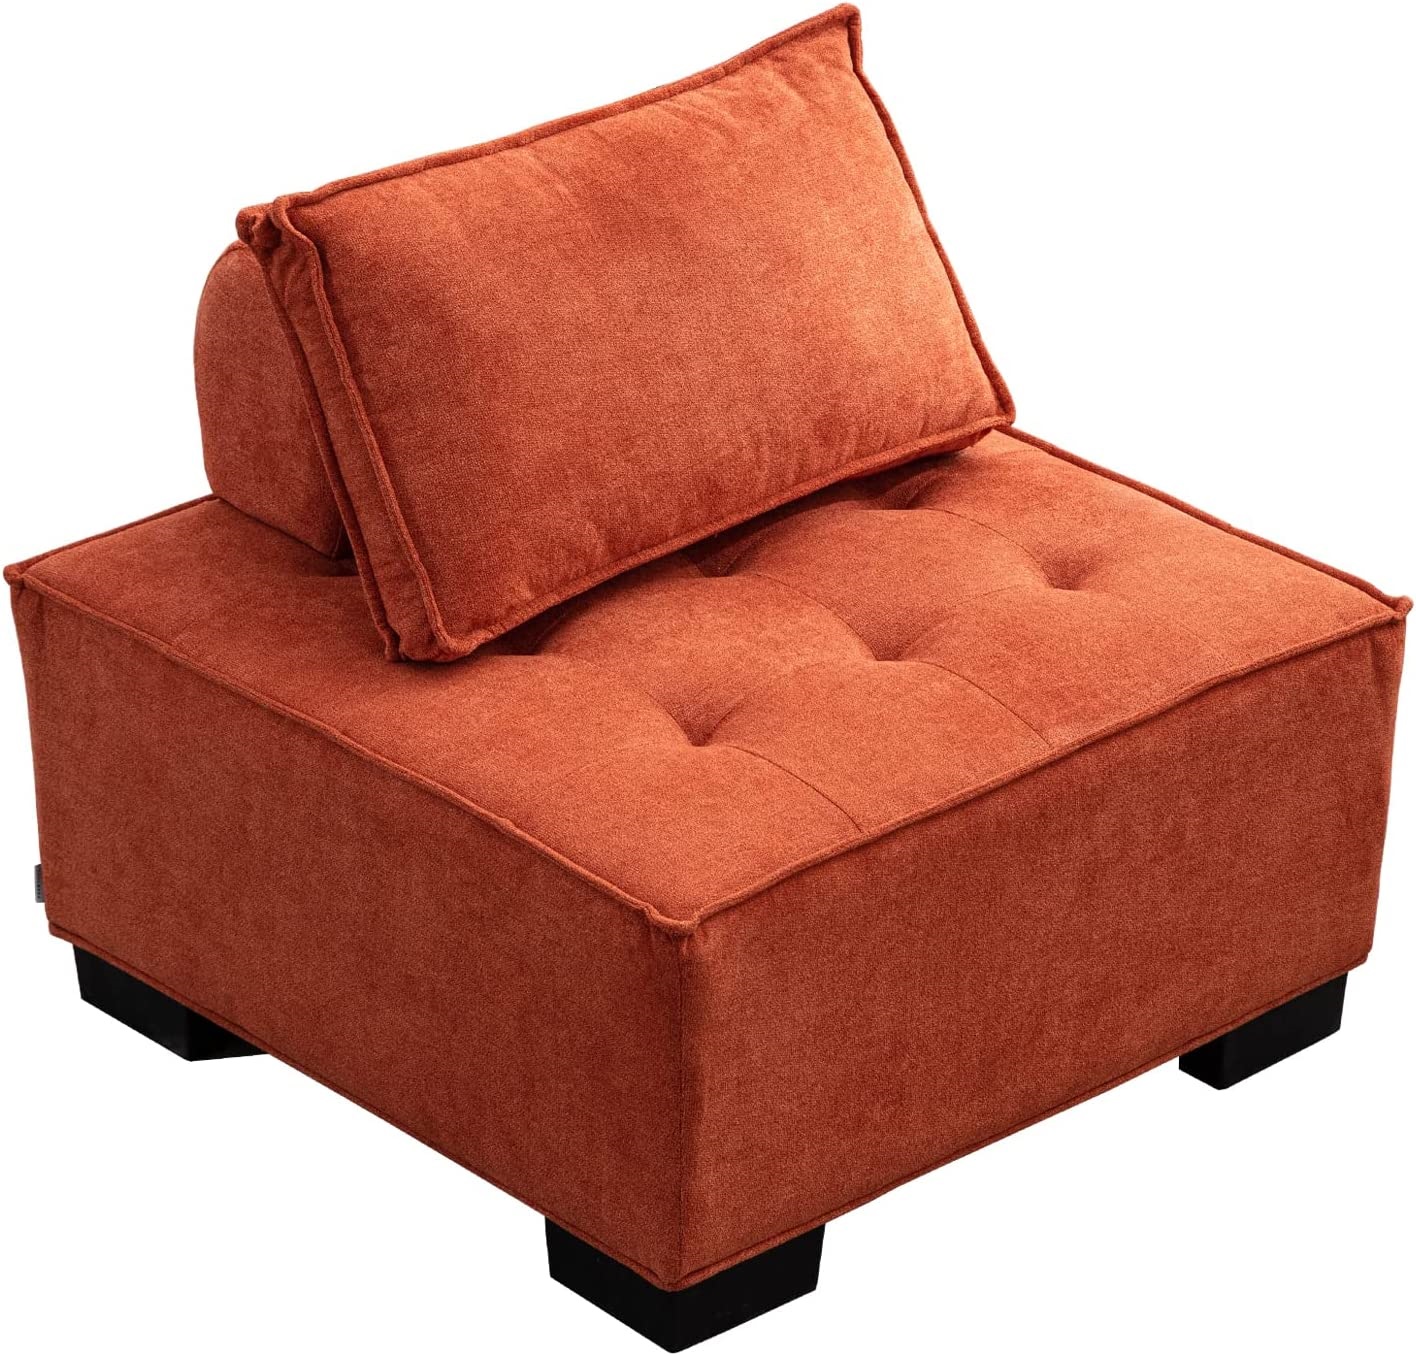 NIOIIKIT Modern Upholstered Barrel Chair